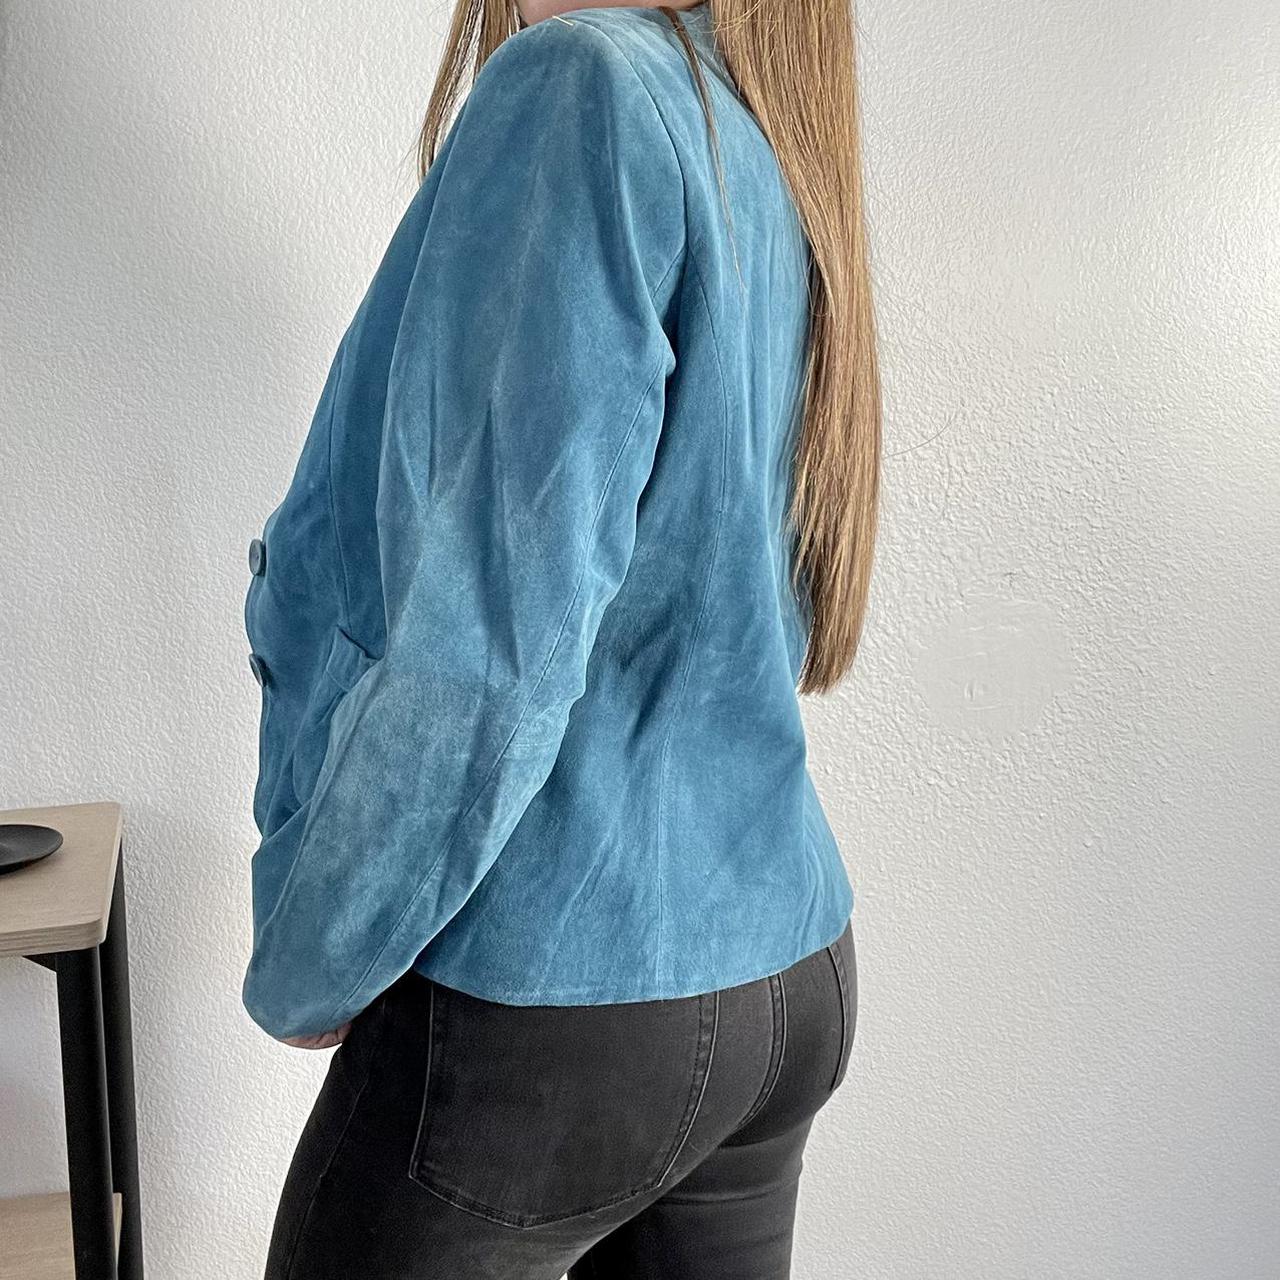 Petite Sophisticate Women's Blue Jacket (2)